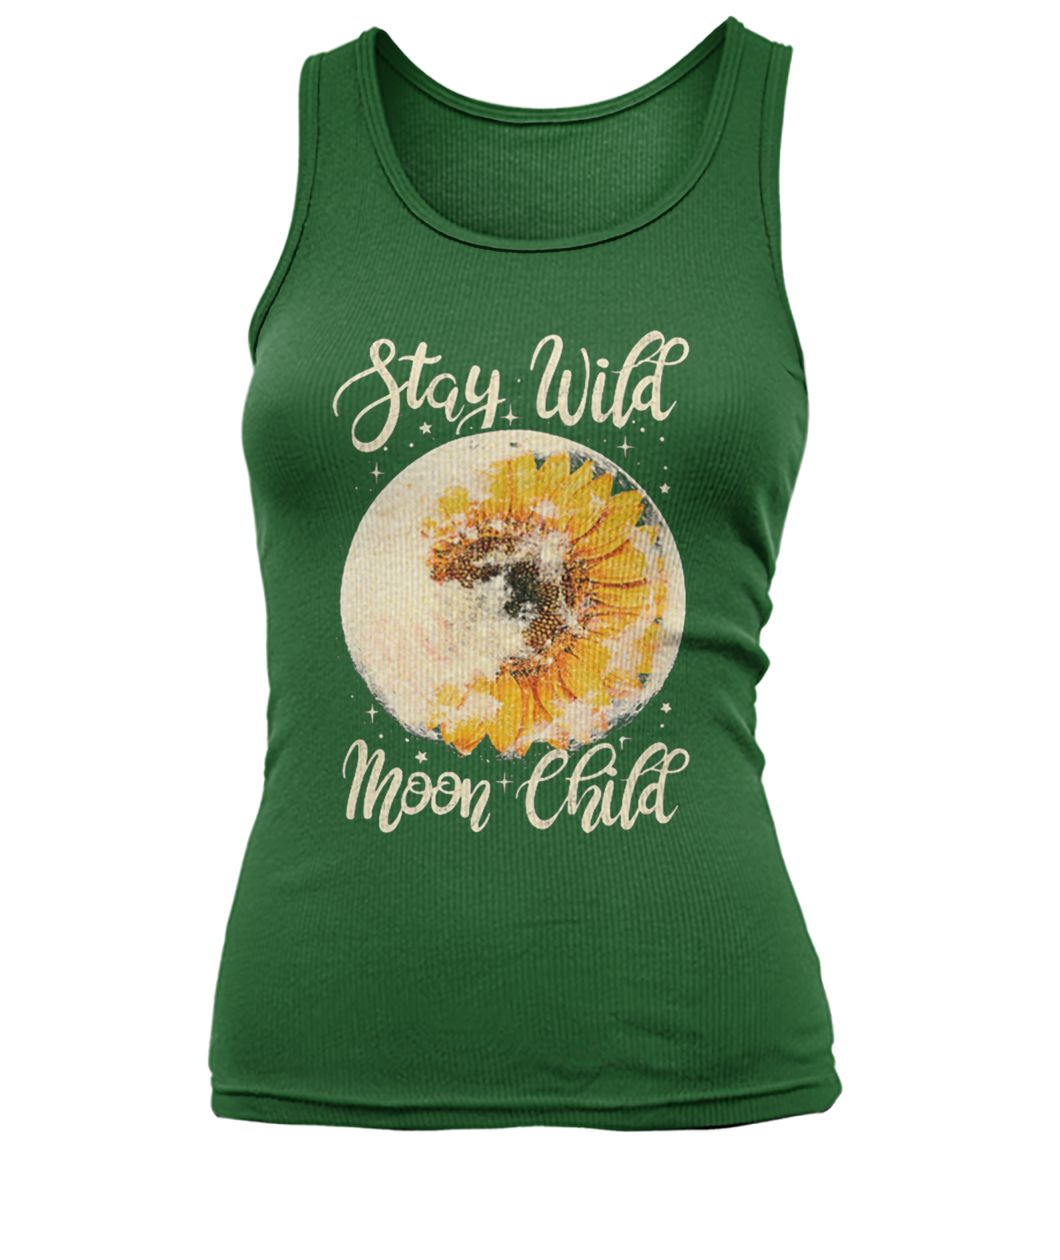 Stay wild moon child hippie sunflower women's tank top